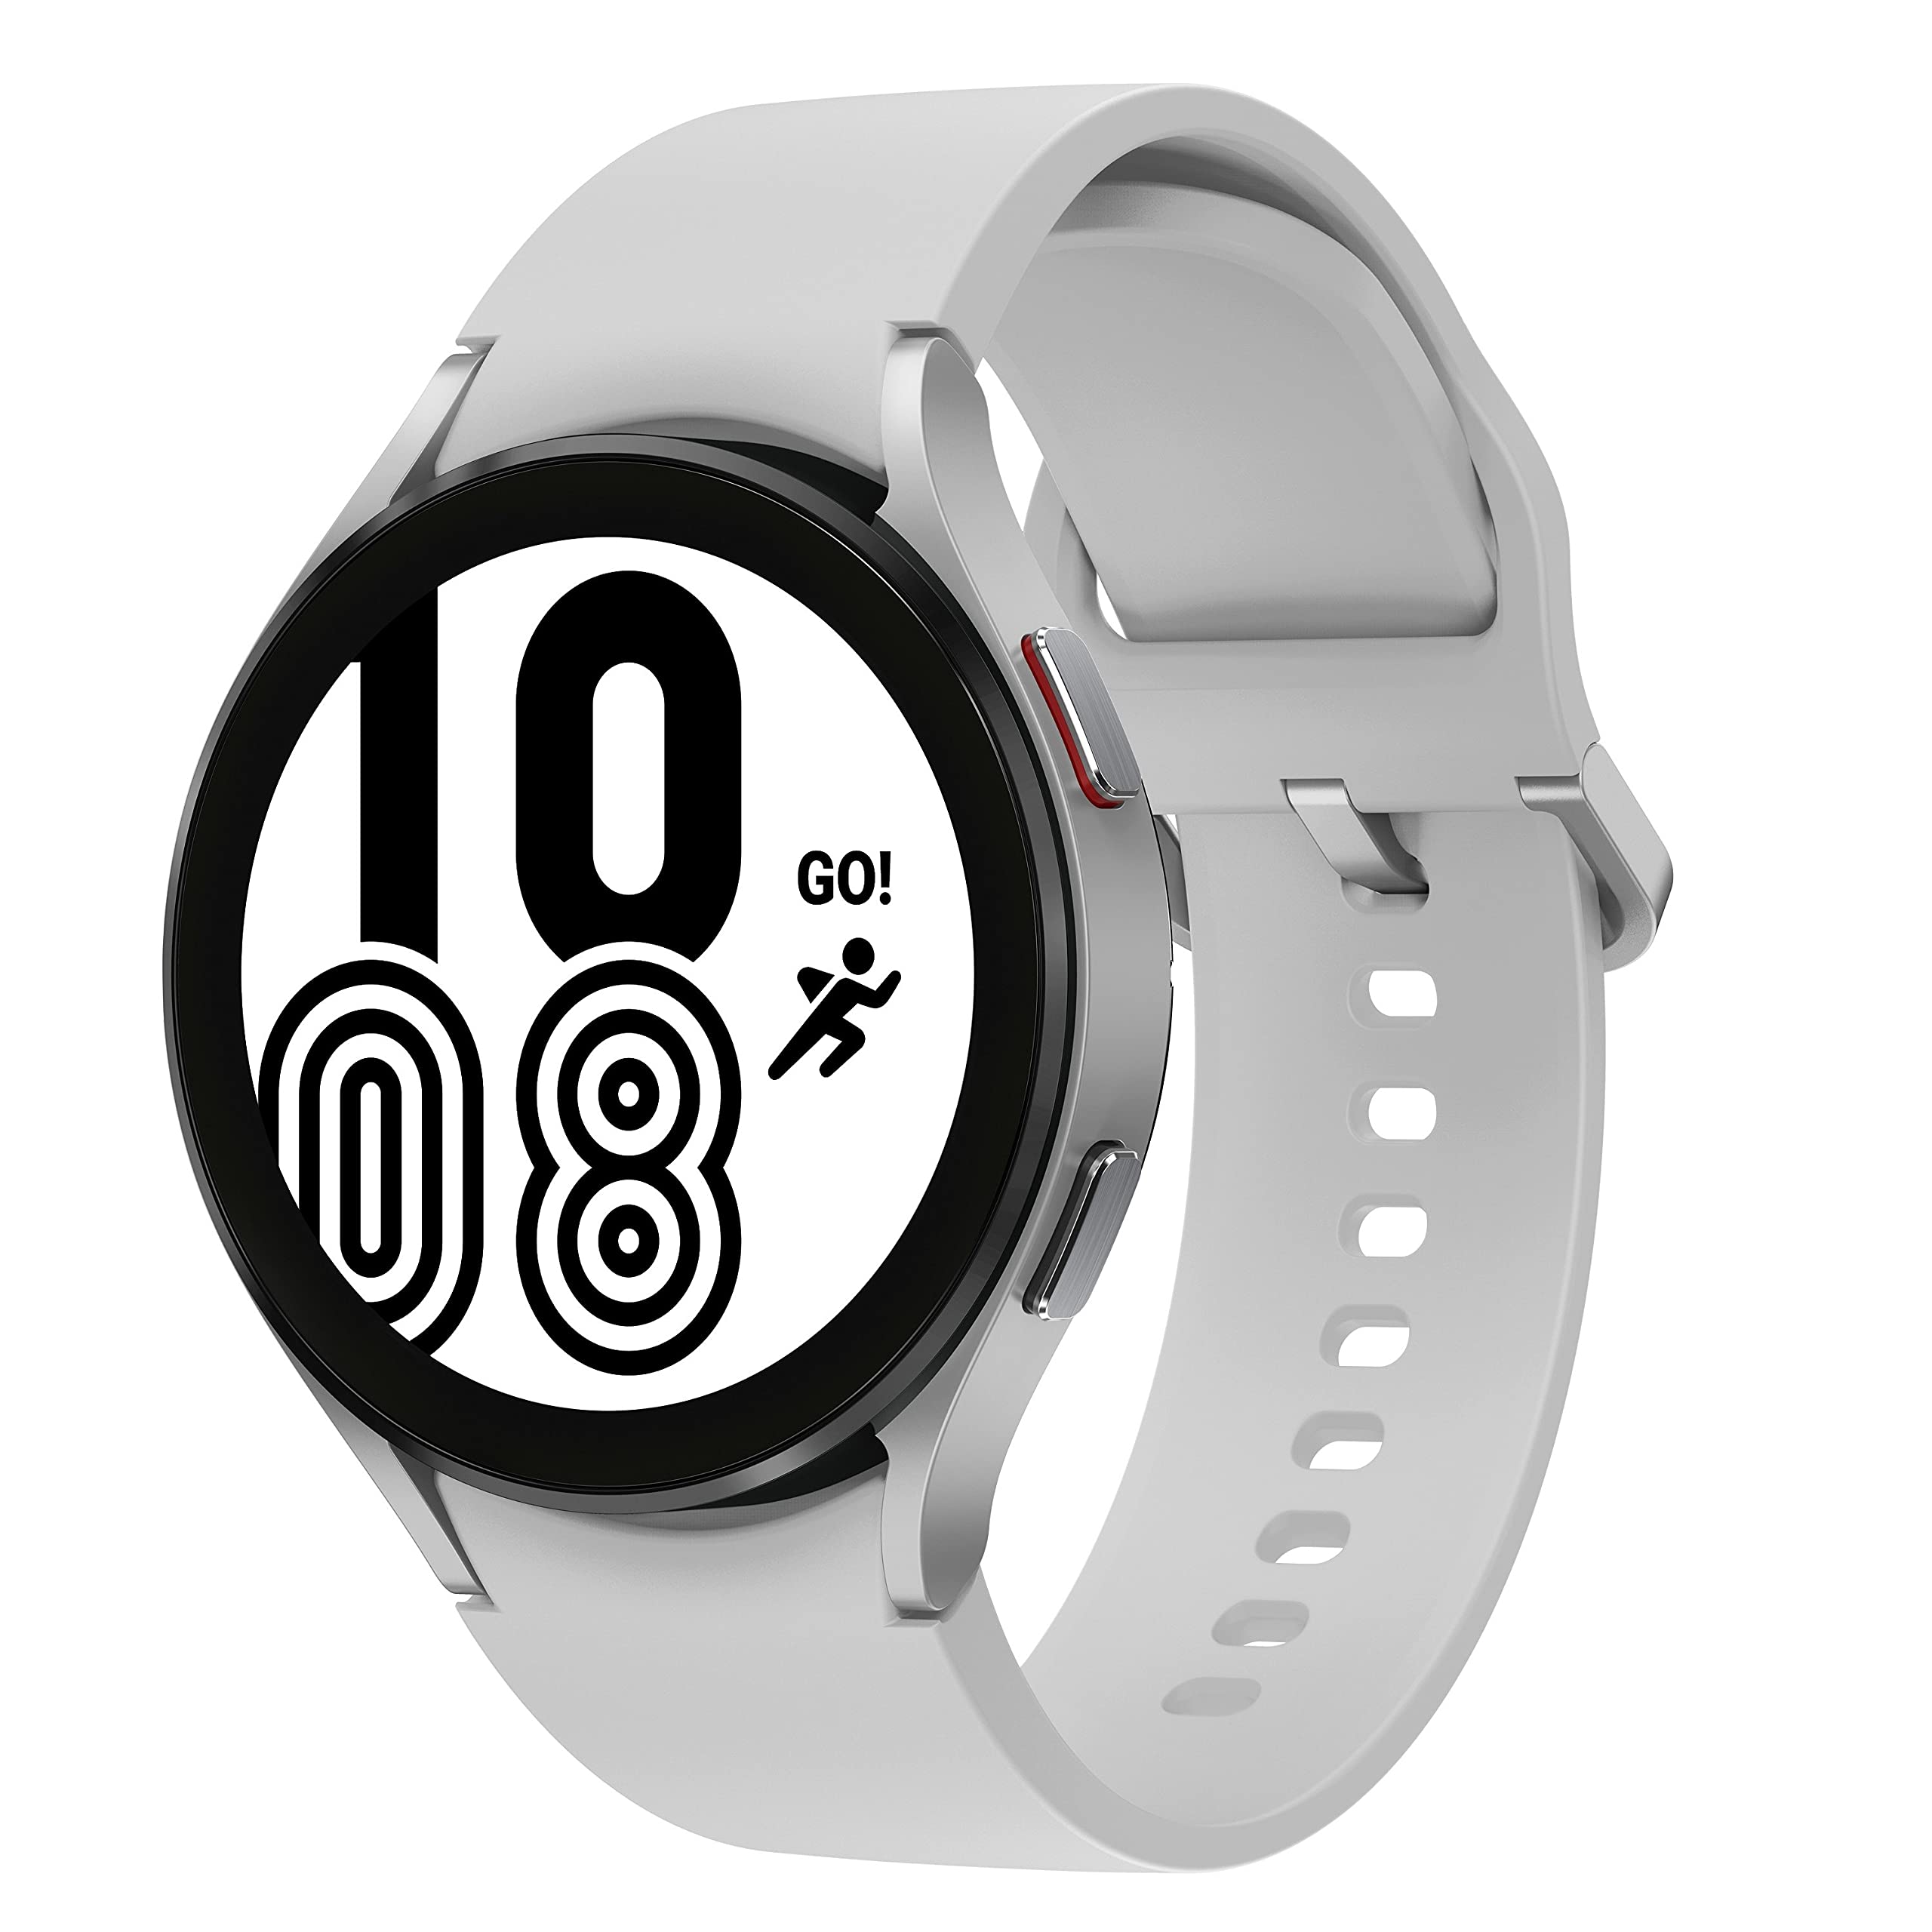 Samsung Galaxy Watch4 BT, Runde Bluetooth Smartwatch, Wear OS, dreh-Bare Lünette, Fit-nessuhr, Fitness-Tracker, 44 mm, Silver [EU Version]